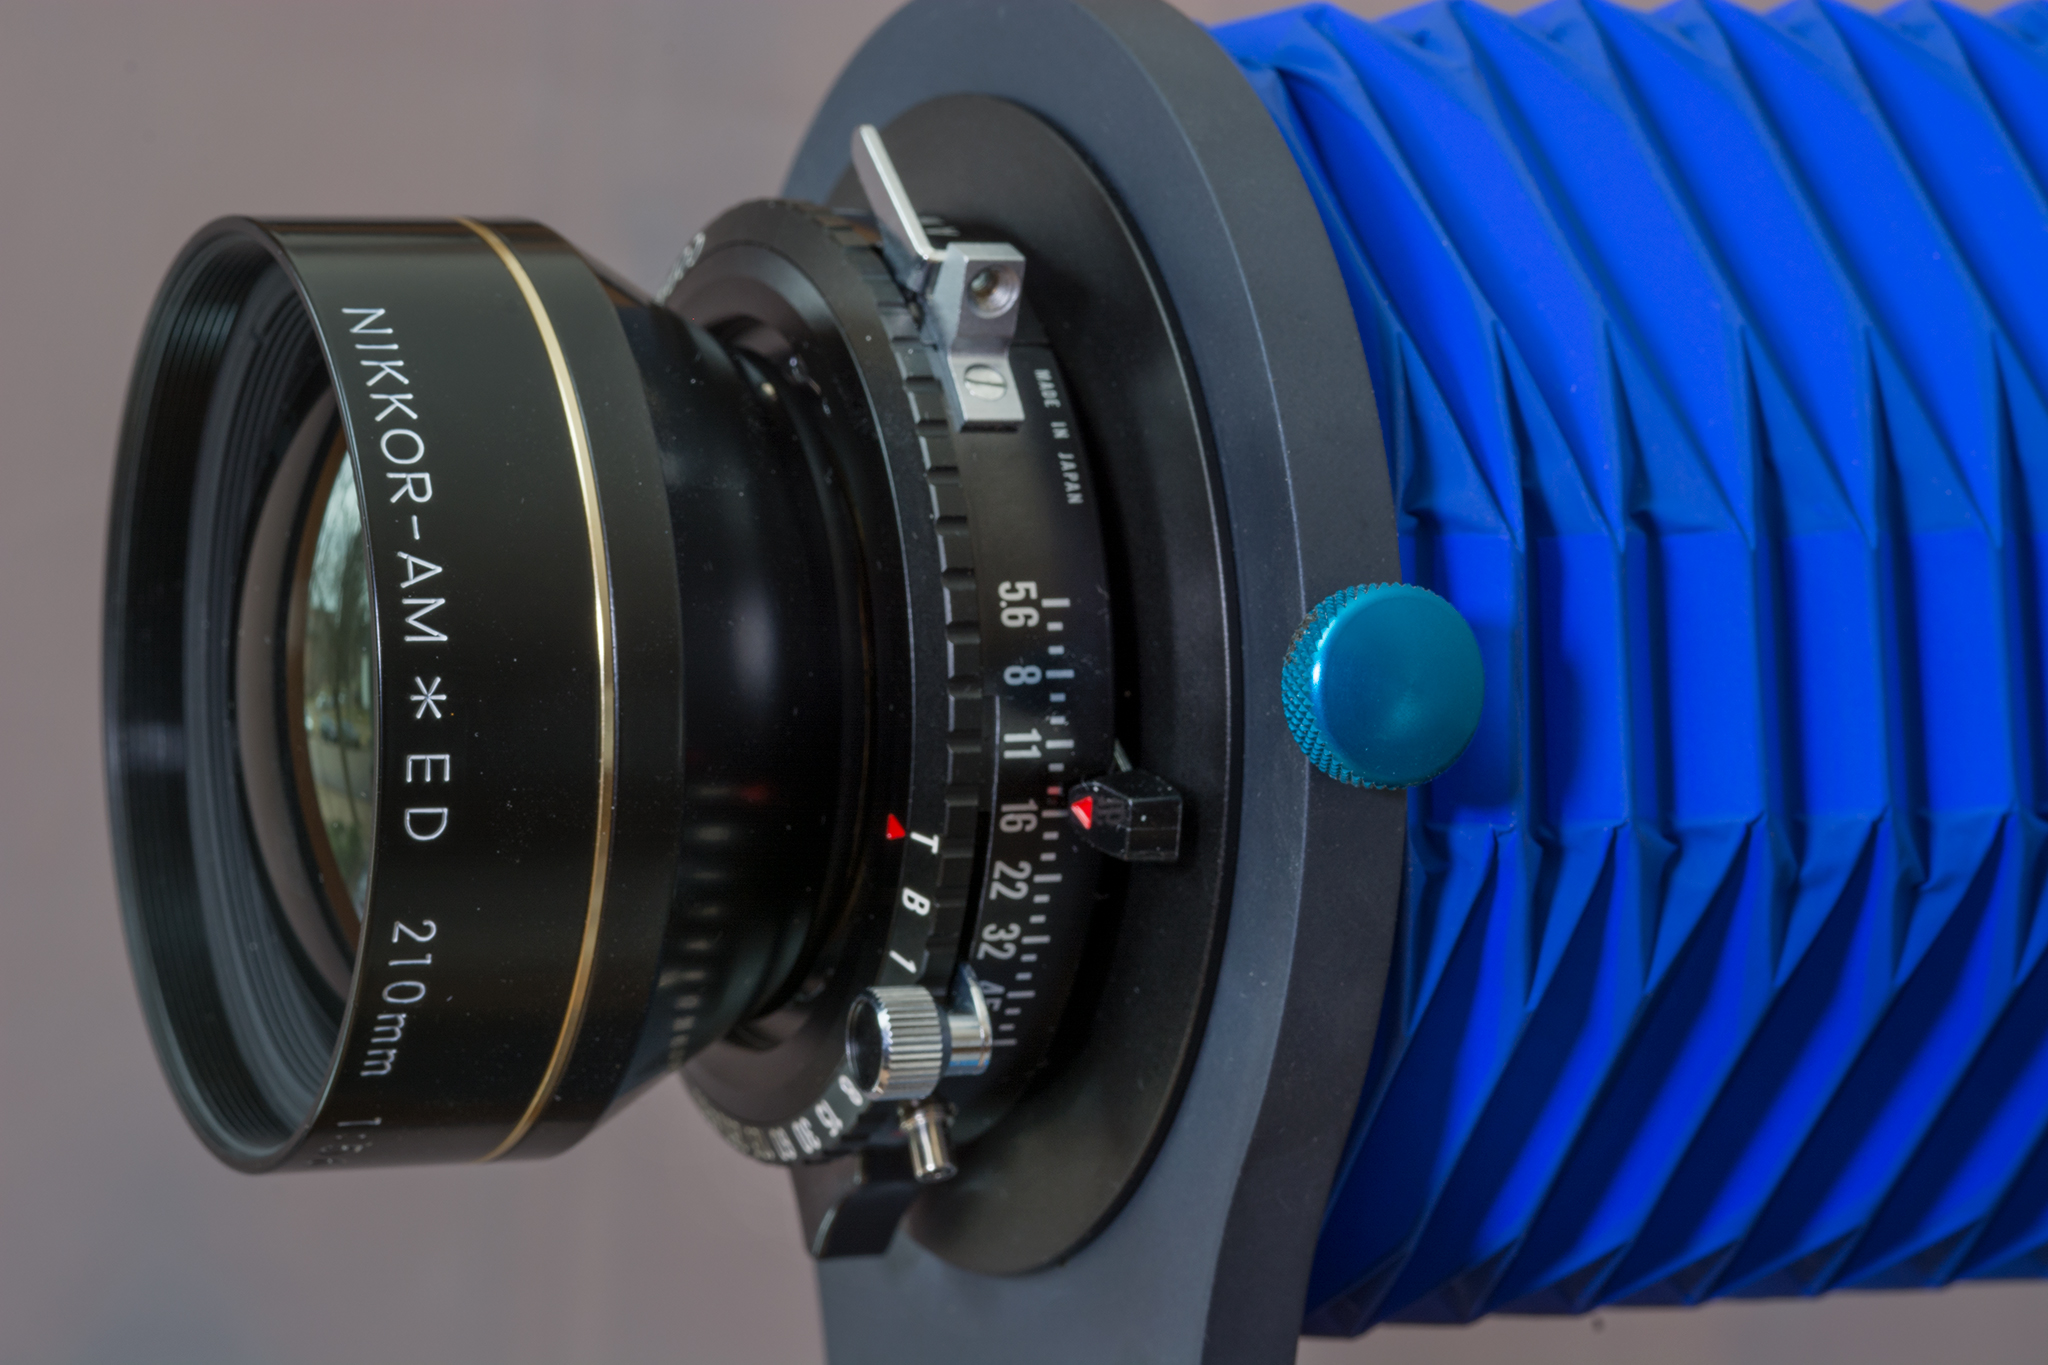 LF Lenses (AM-ED 210mm) on the DSLR and Fuji GFX